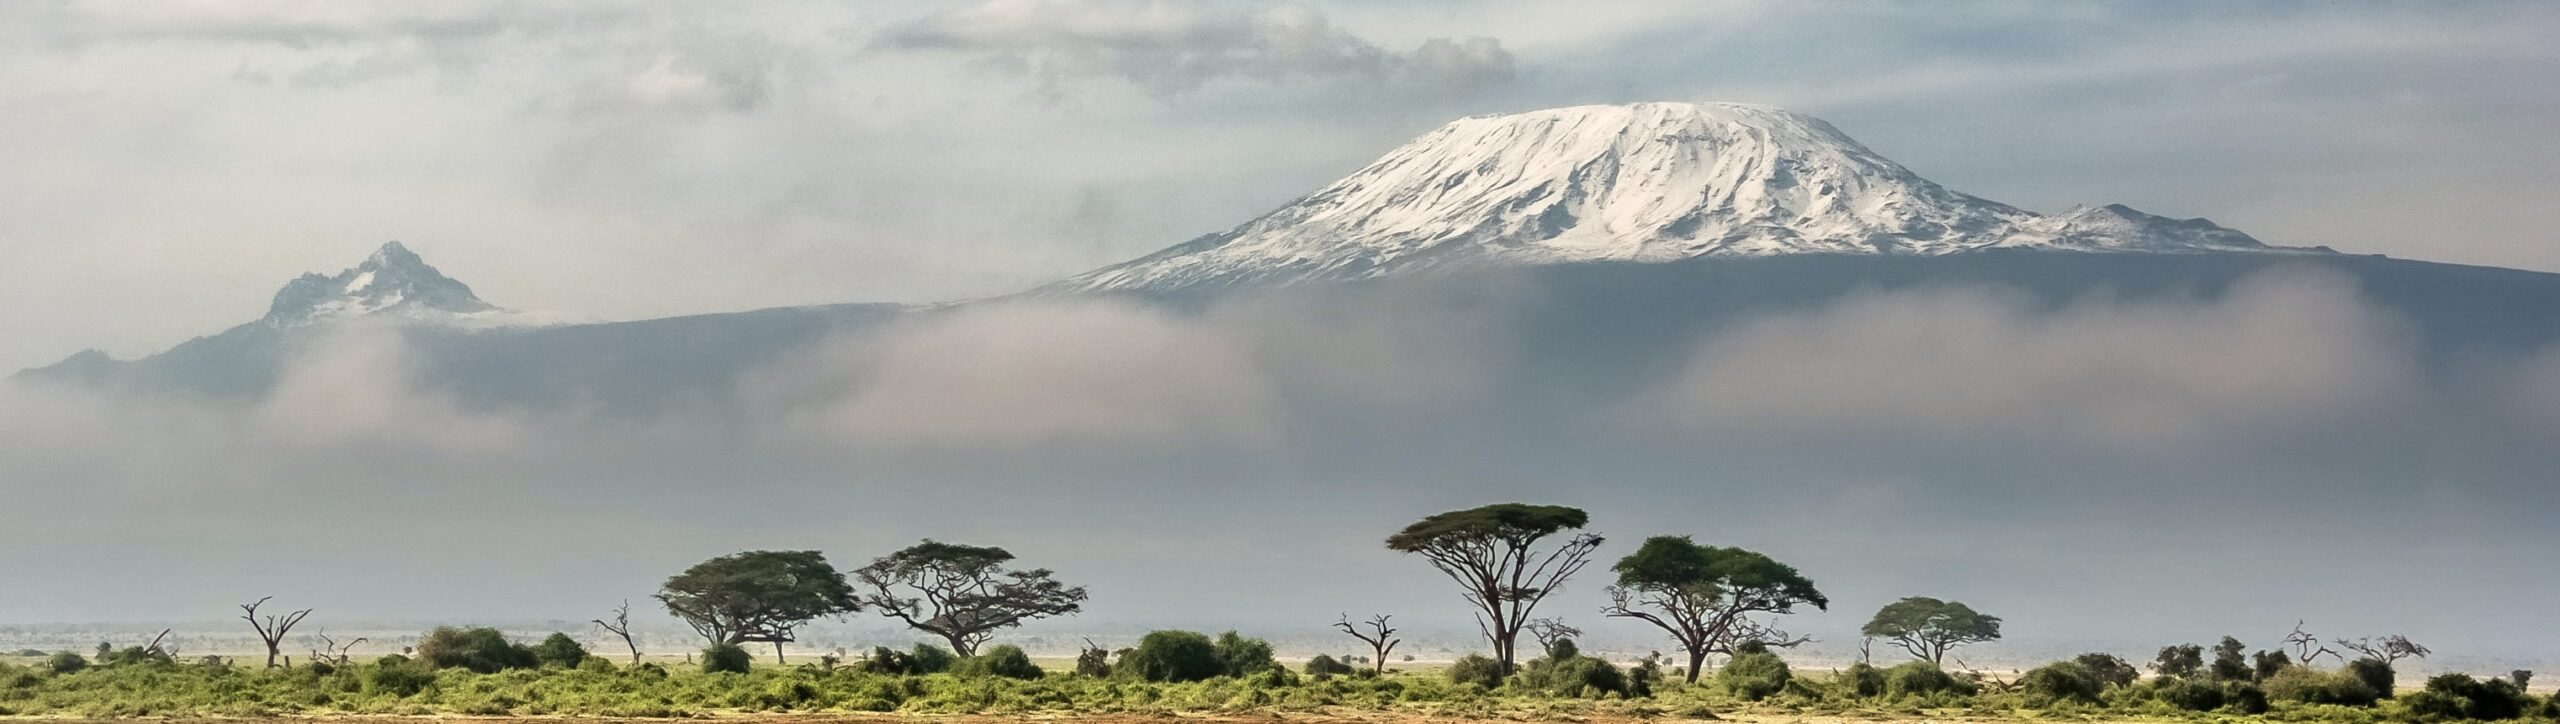 Voyage au Kenya découvrir Amboseli